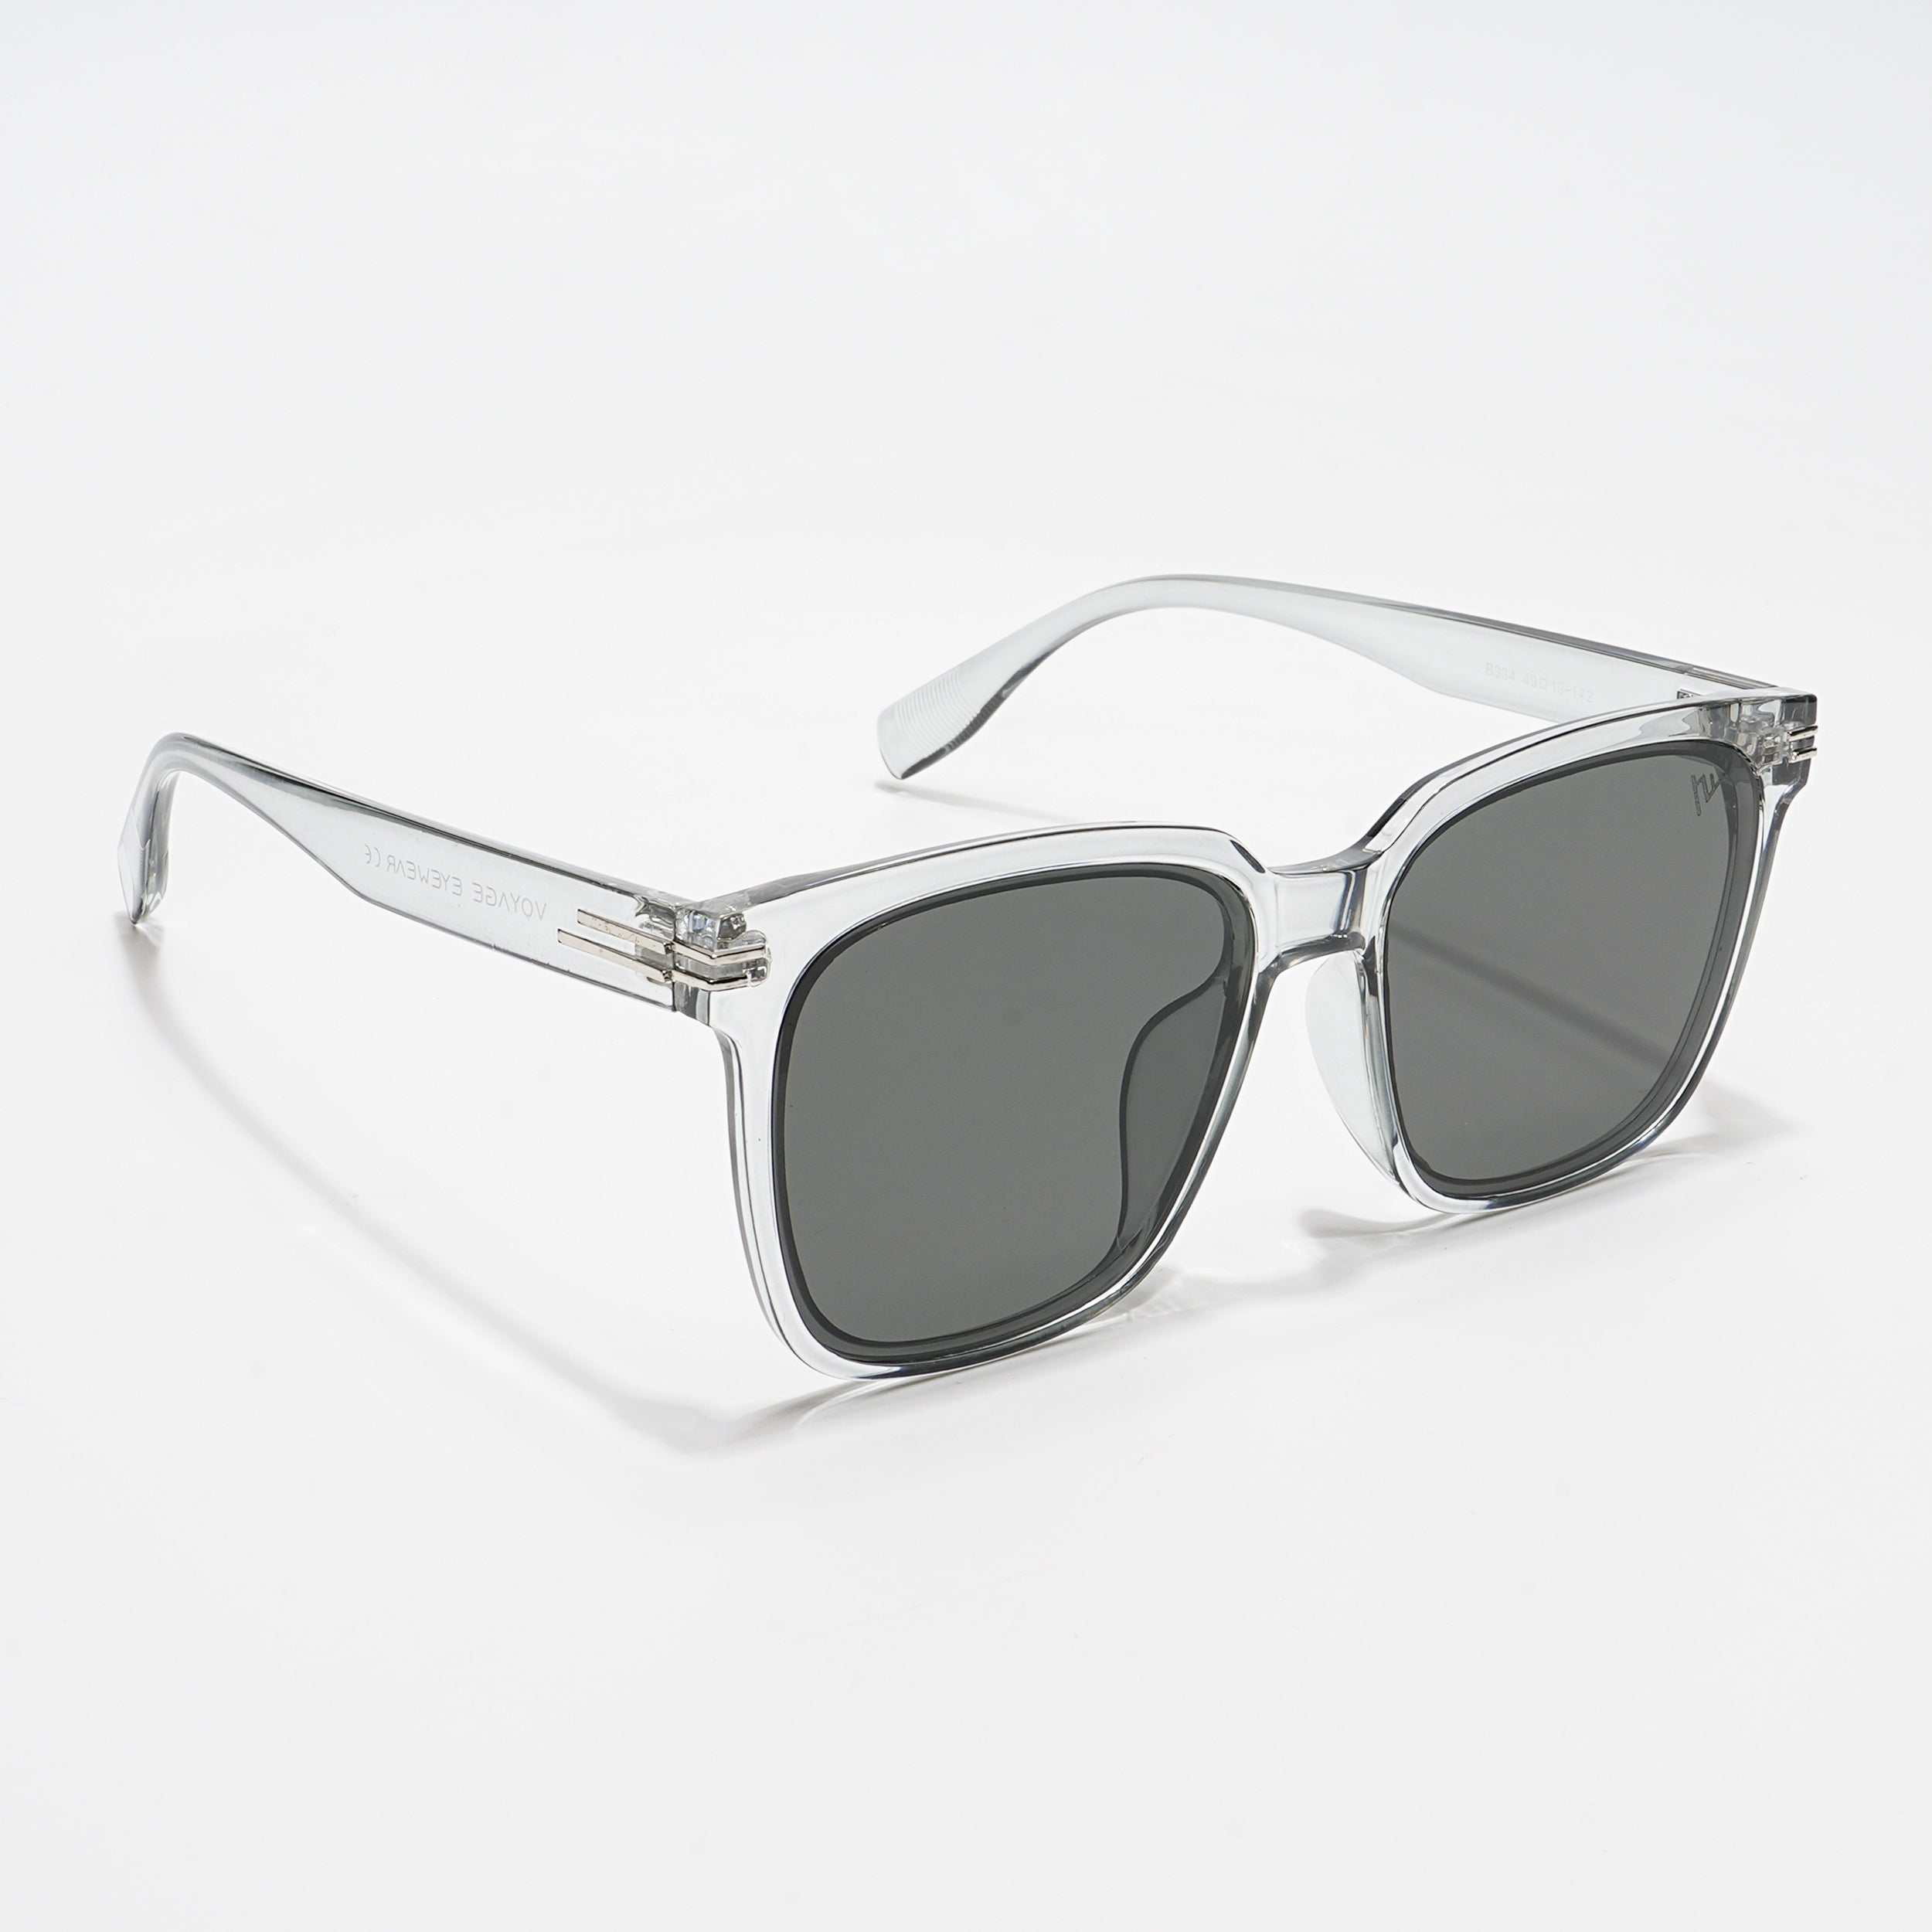 Voyage Gradient Grey Wayfarer Sunglasses - MG3631